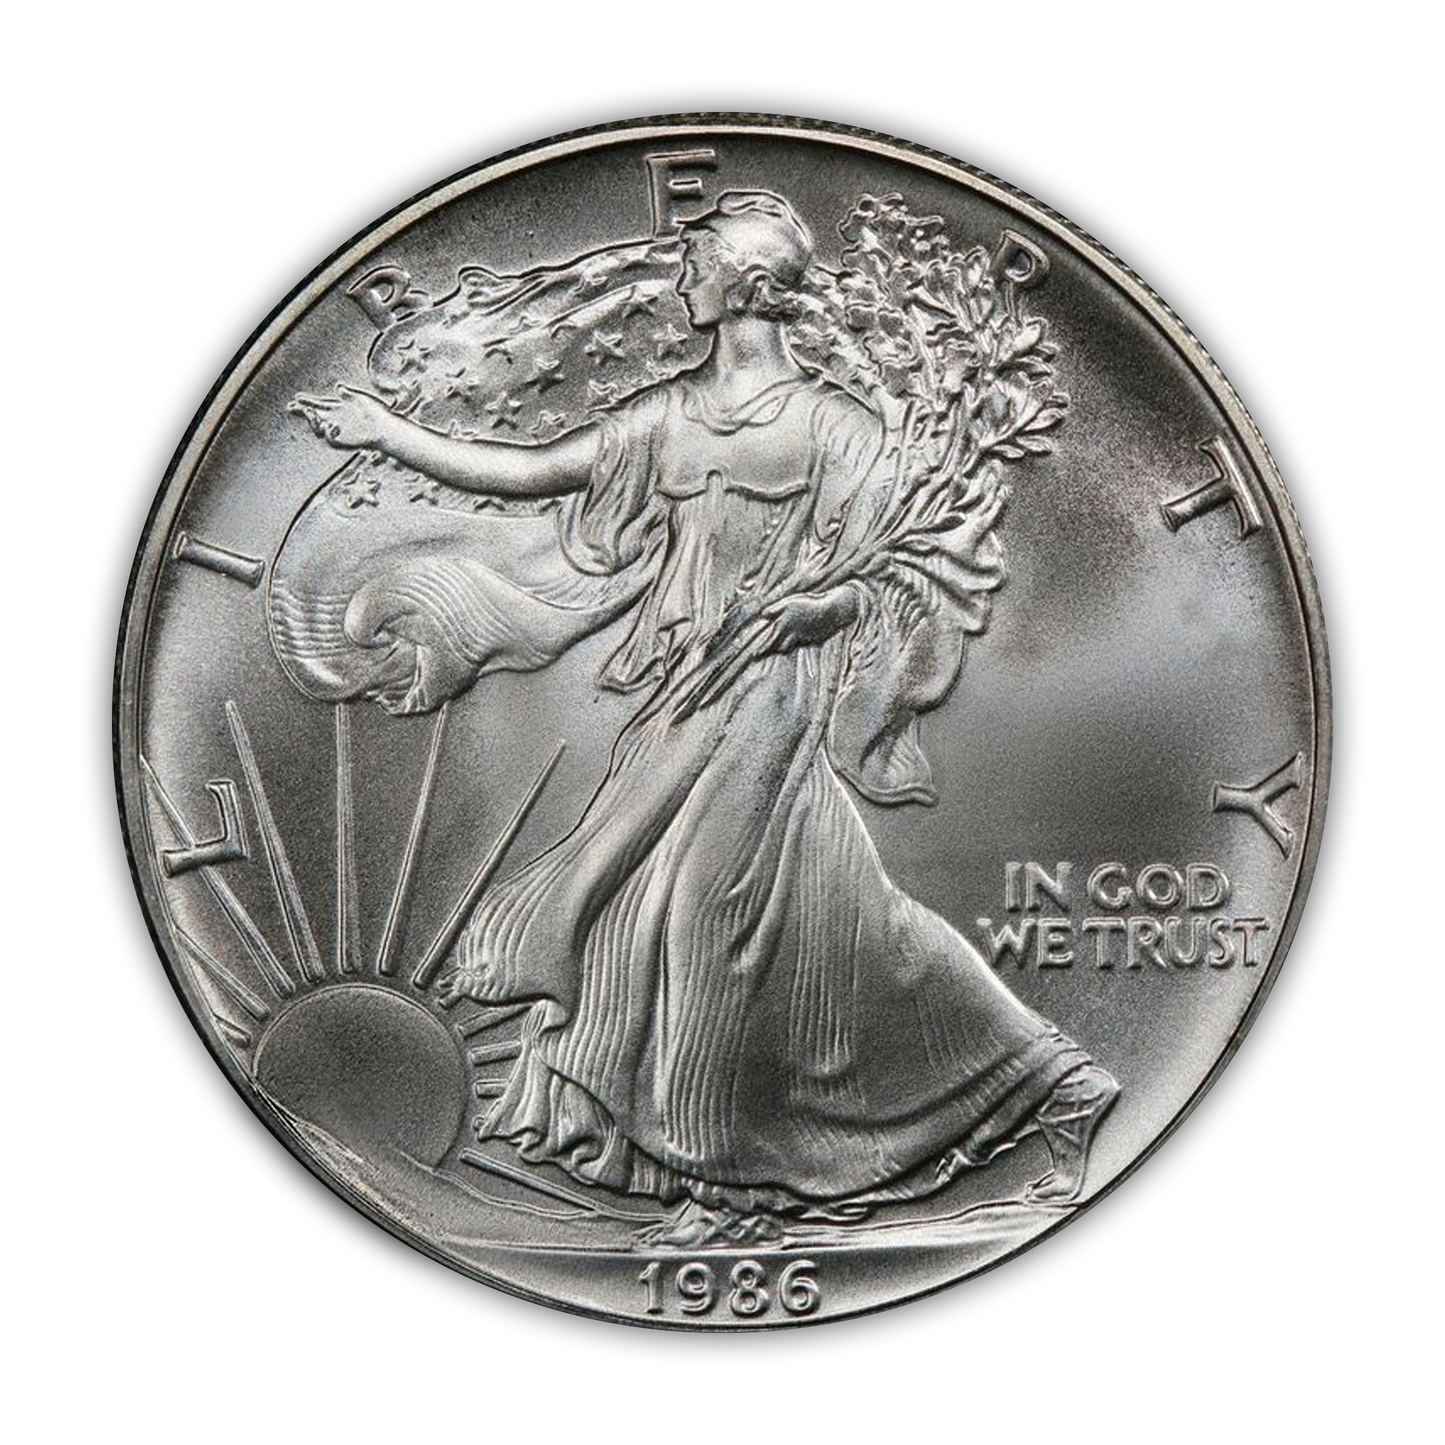 1986 - 2021 Silver Eagle Type 1 35 Coin Uncirculated Set - Premium Collectors Vista Album